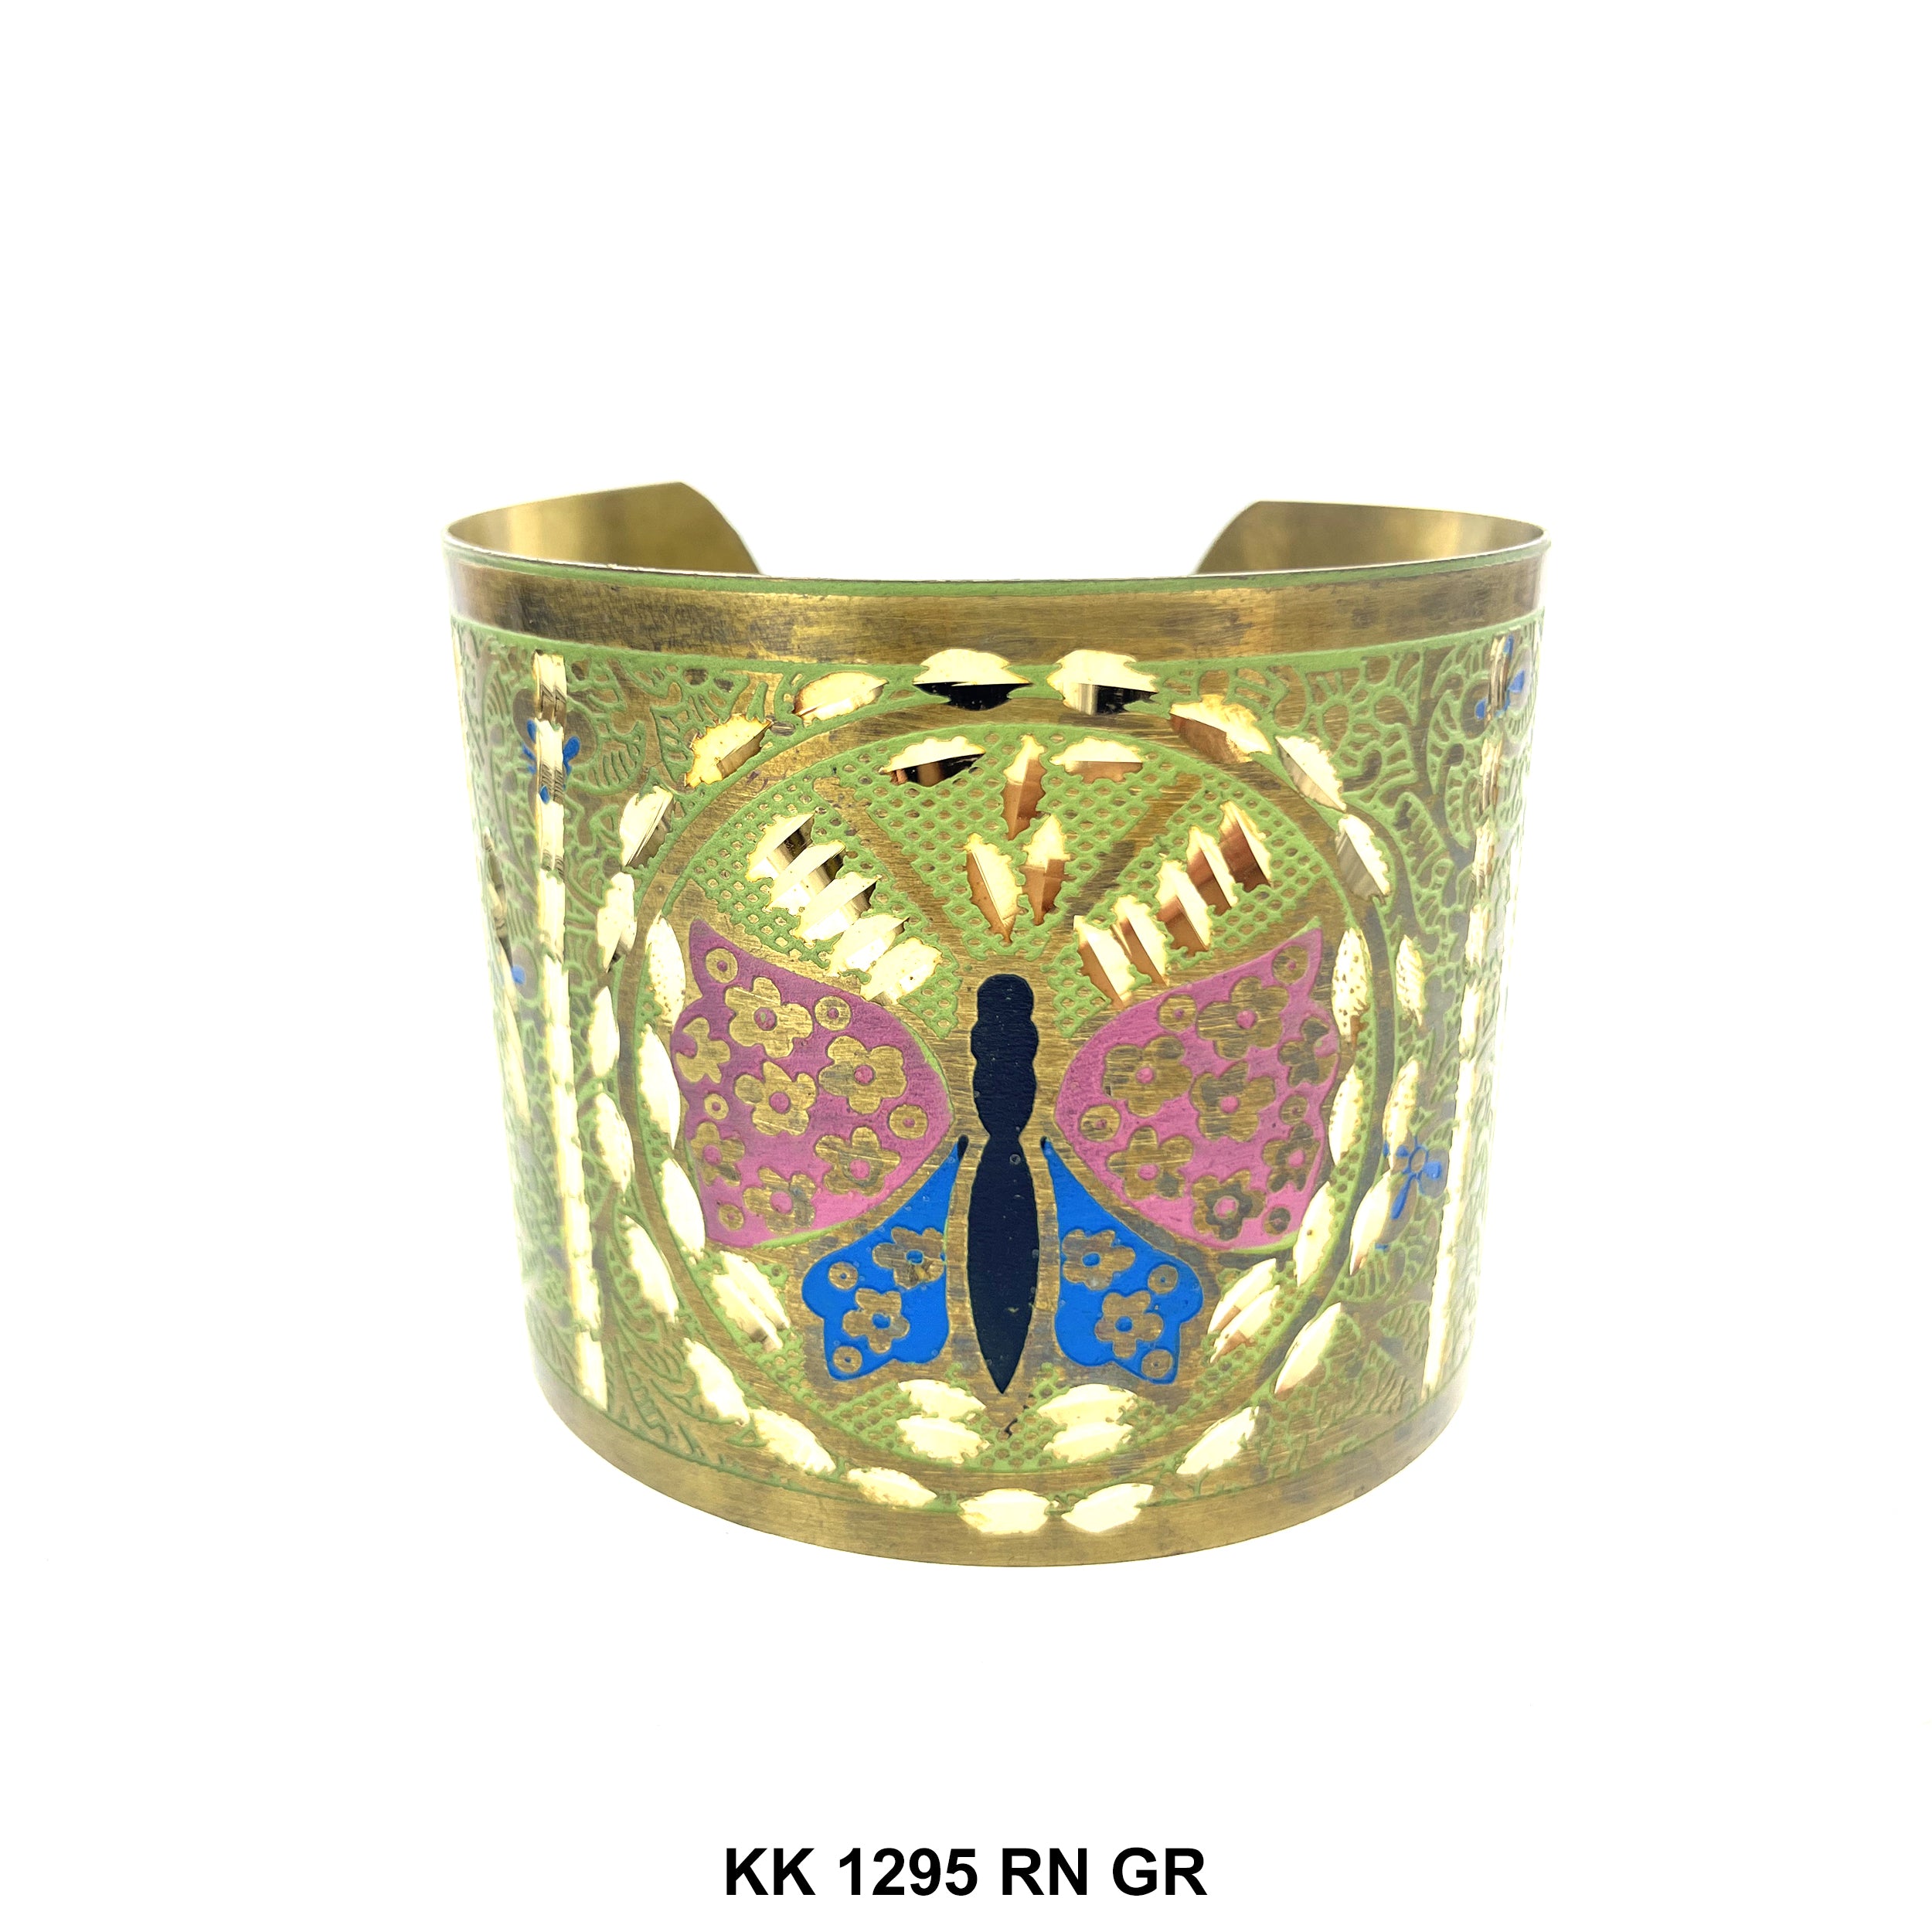 Hand Engraved Cuff Bangle Bracelet KK 1295 RN GR